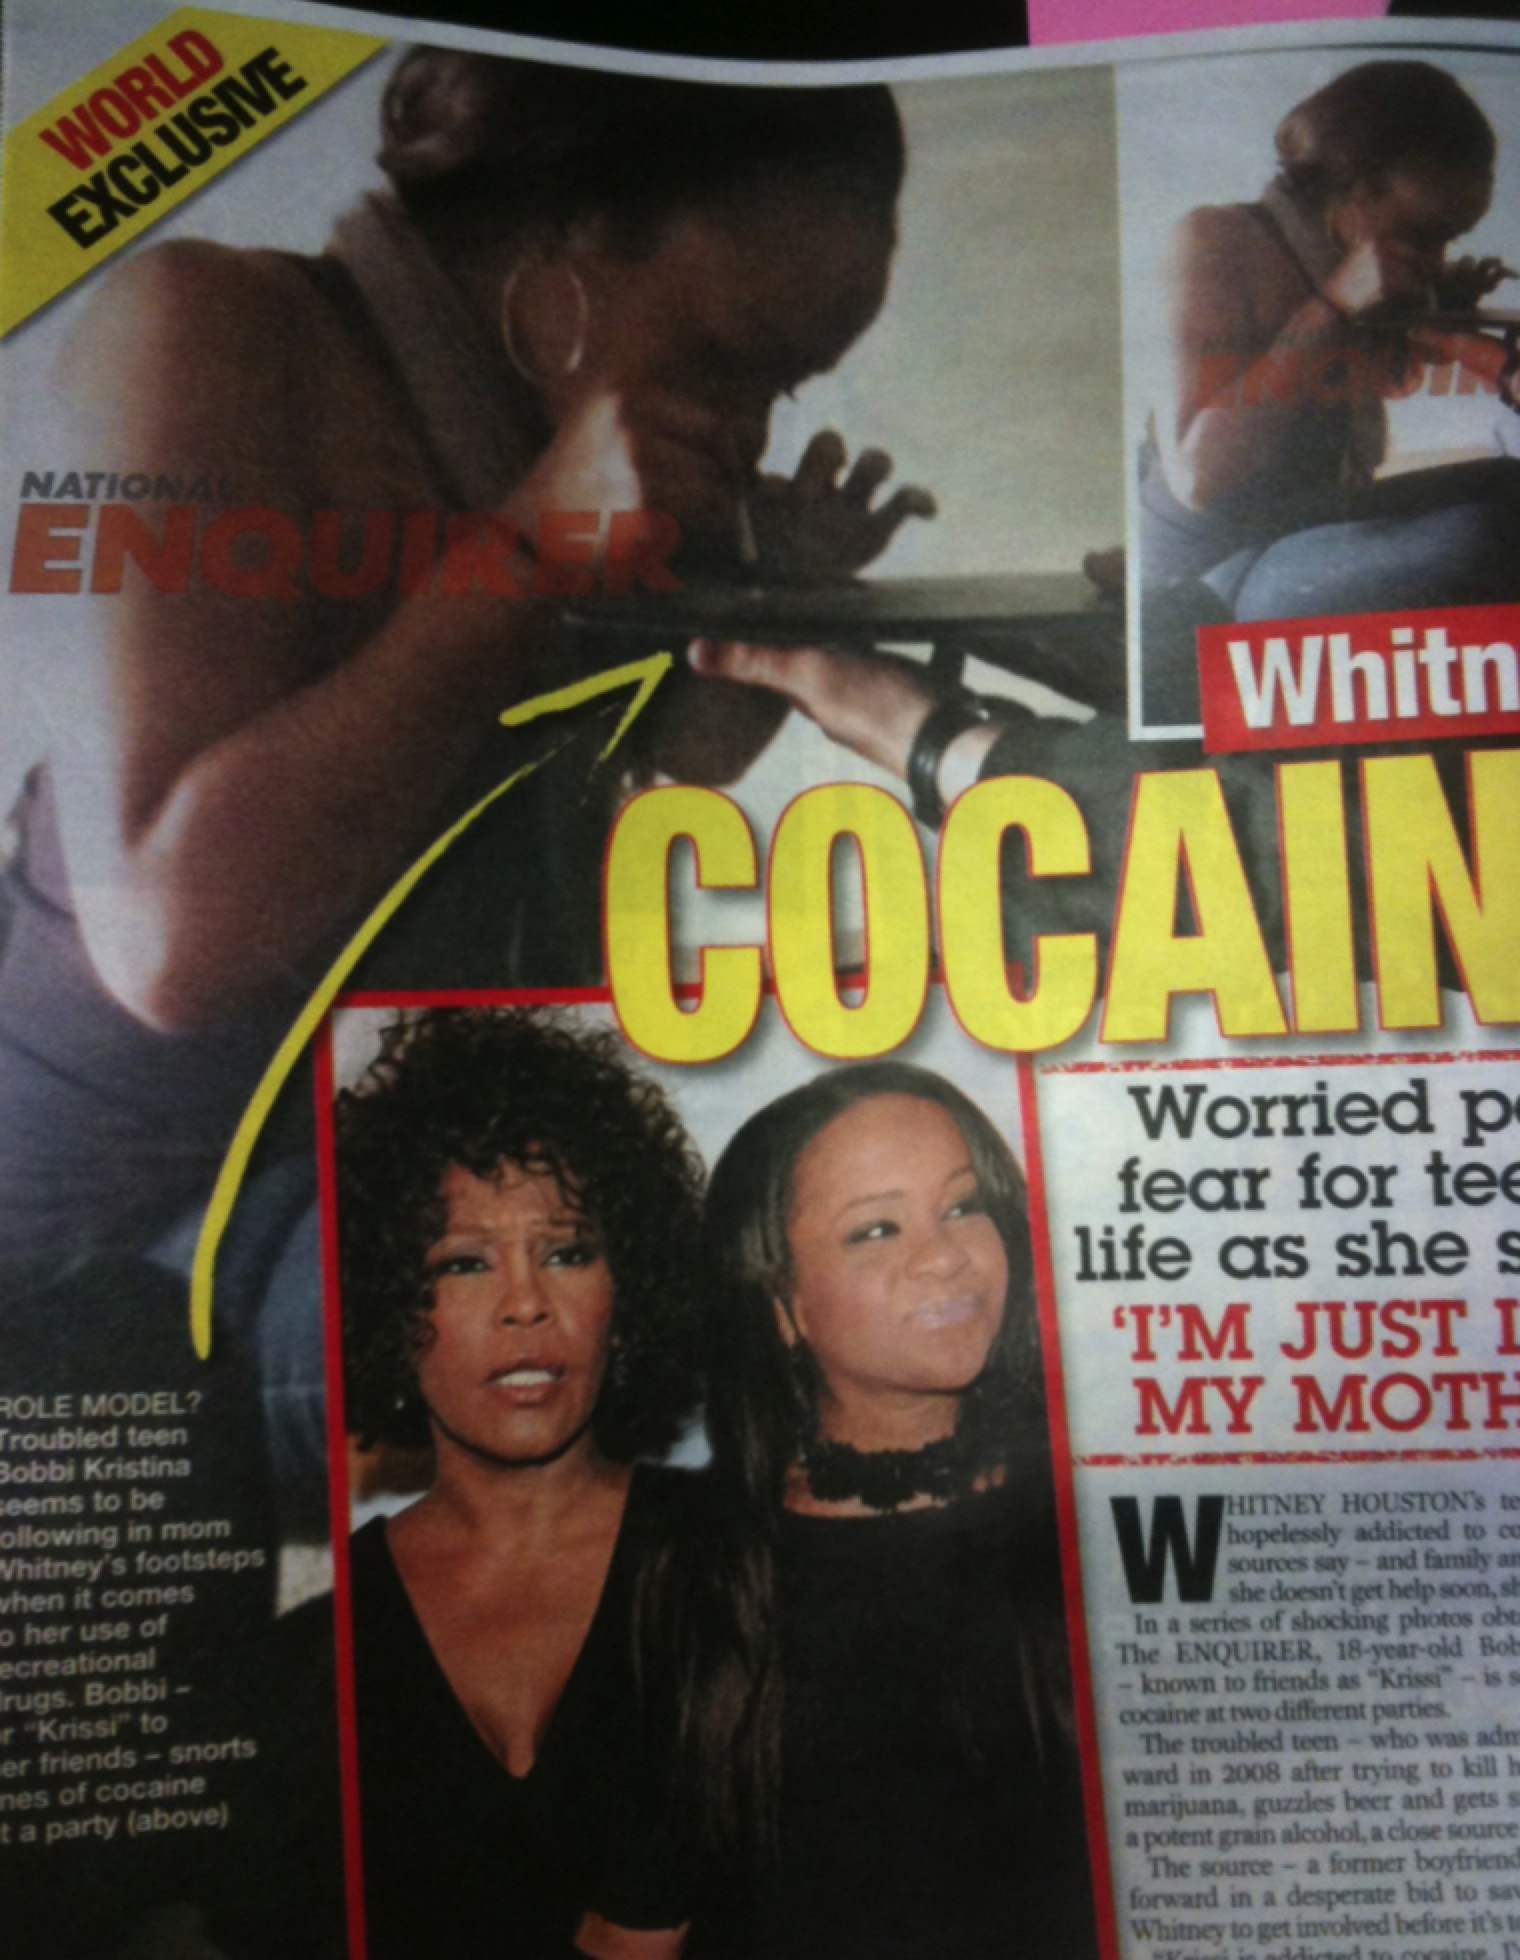 http://entertainmentrundown.com/wp-content/uploads/2011/03/Bobbi-Kristina-Brown-Alleged-Cocaine-Pictures.jpg